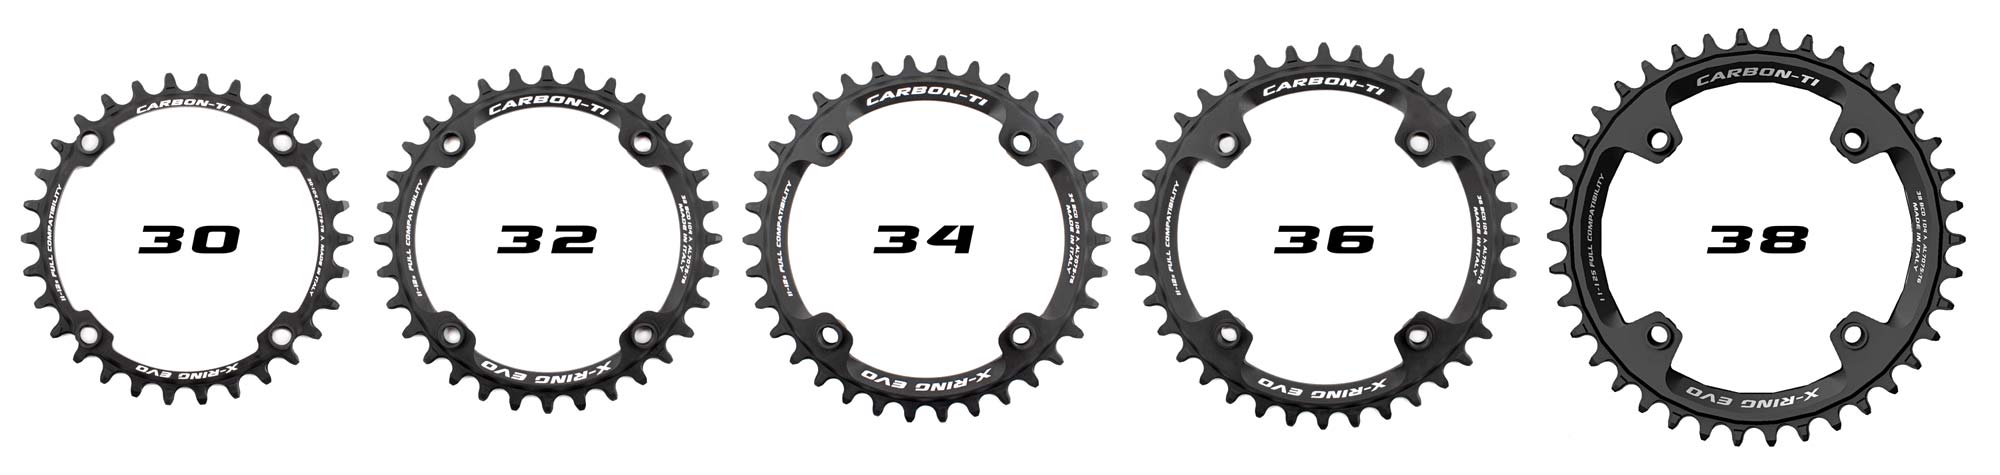 Carbon-Ti X-Ring EVO 1x MTB chainring, 11speed 12speed 4-bolt 104BCD single mountain bike rings, 30, 32, 34, 36, 38T